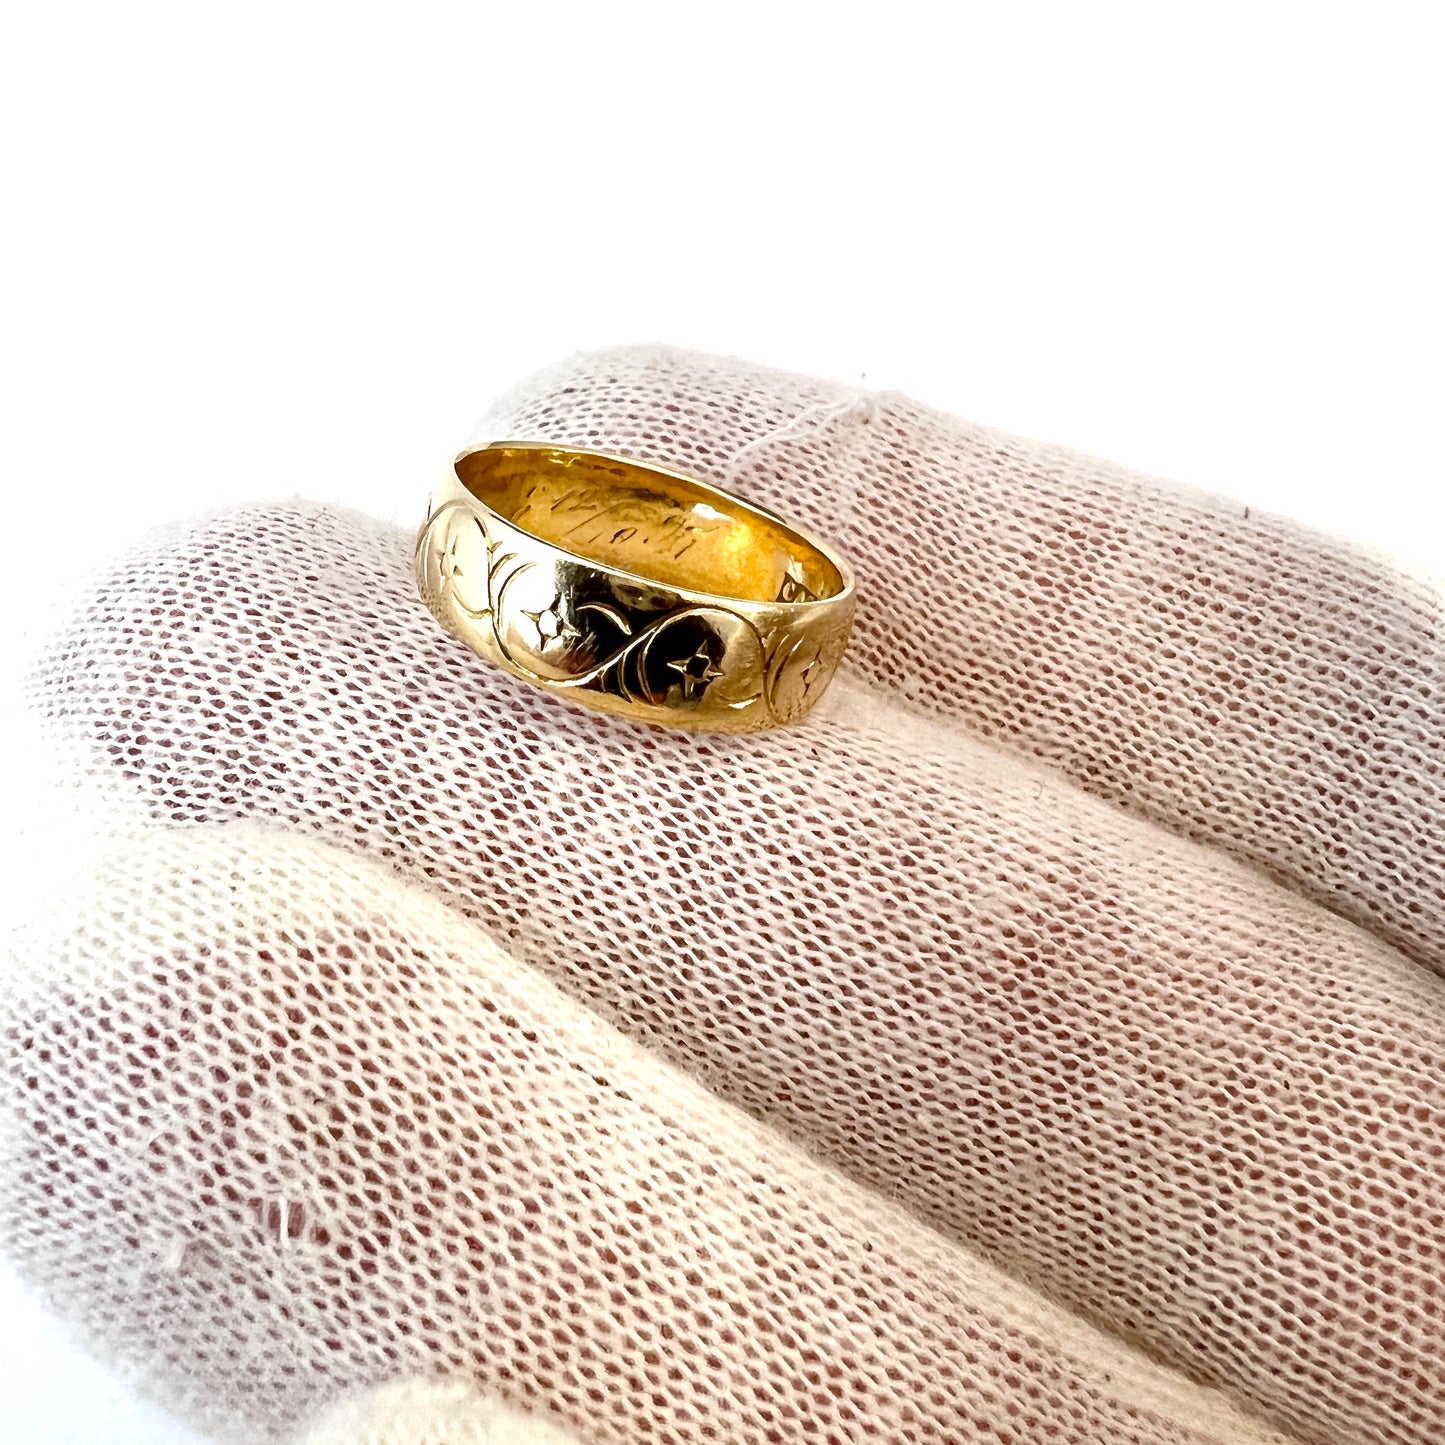 CA Sandberg, Sweden 1897. Antique Victorian 18k Gold Wedding Band Ring.